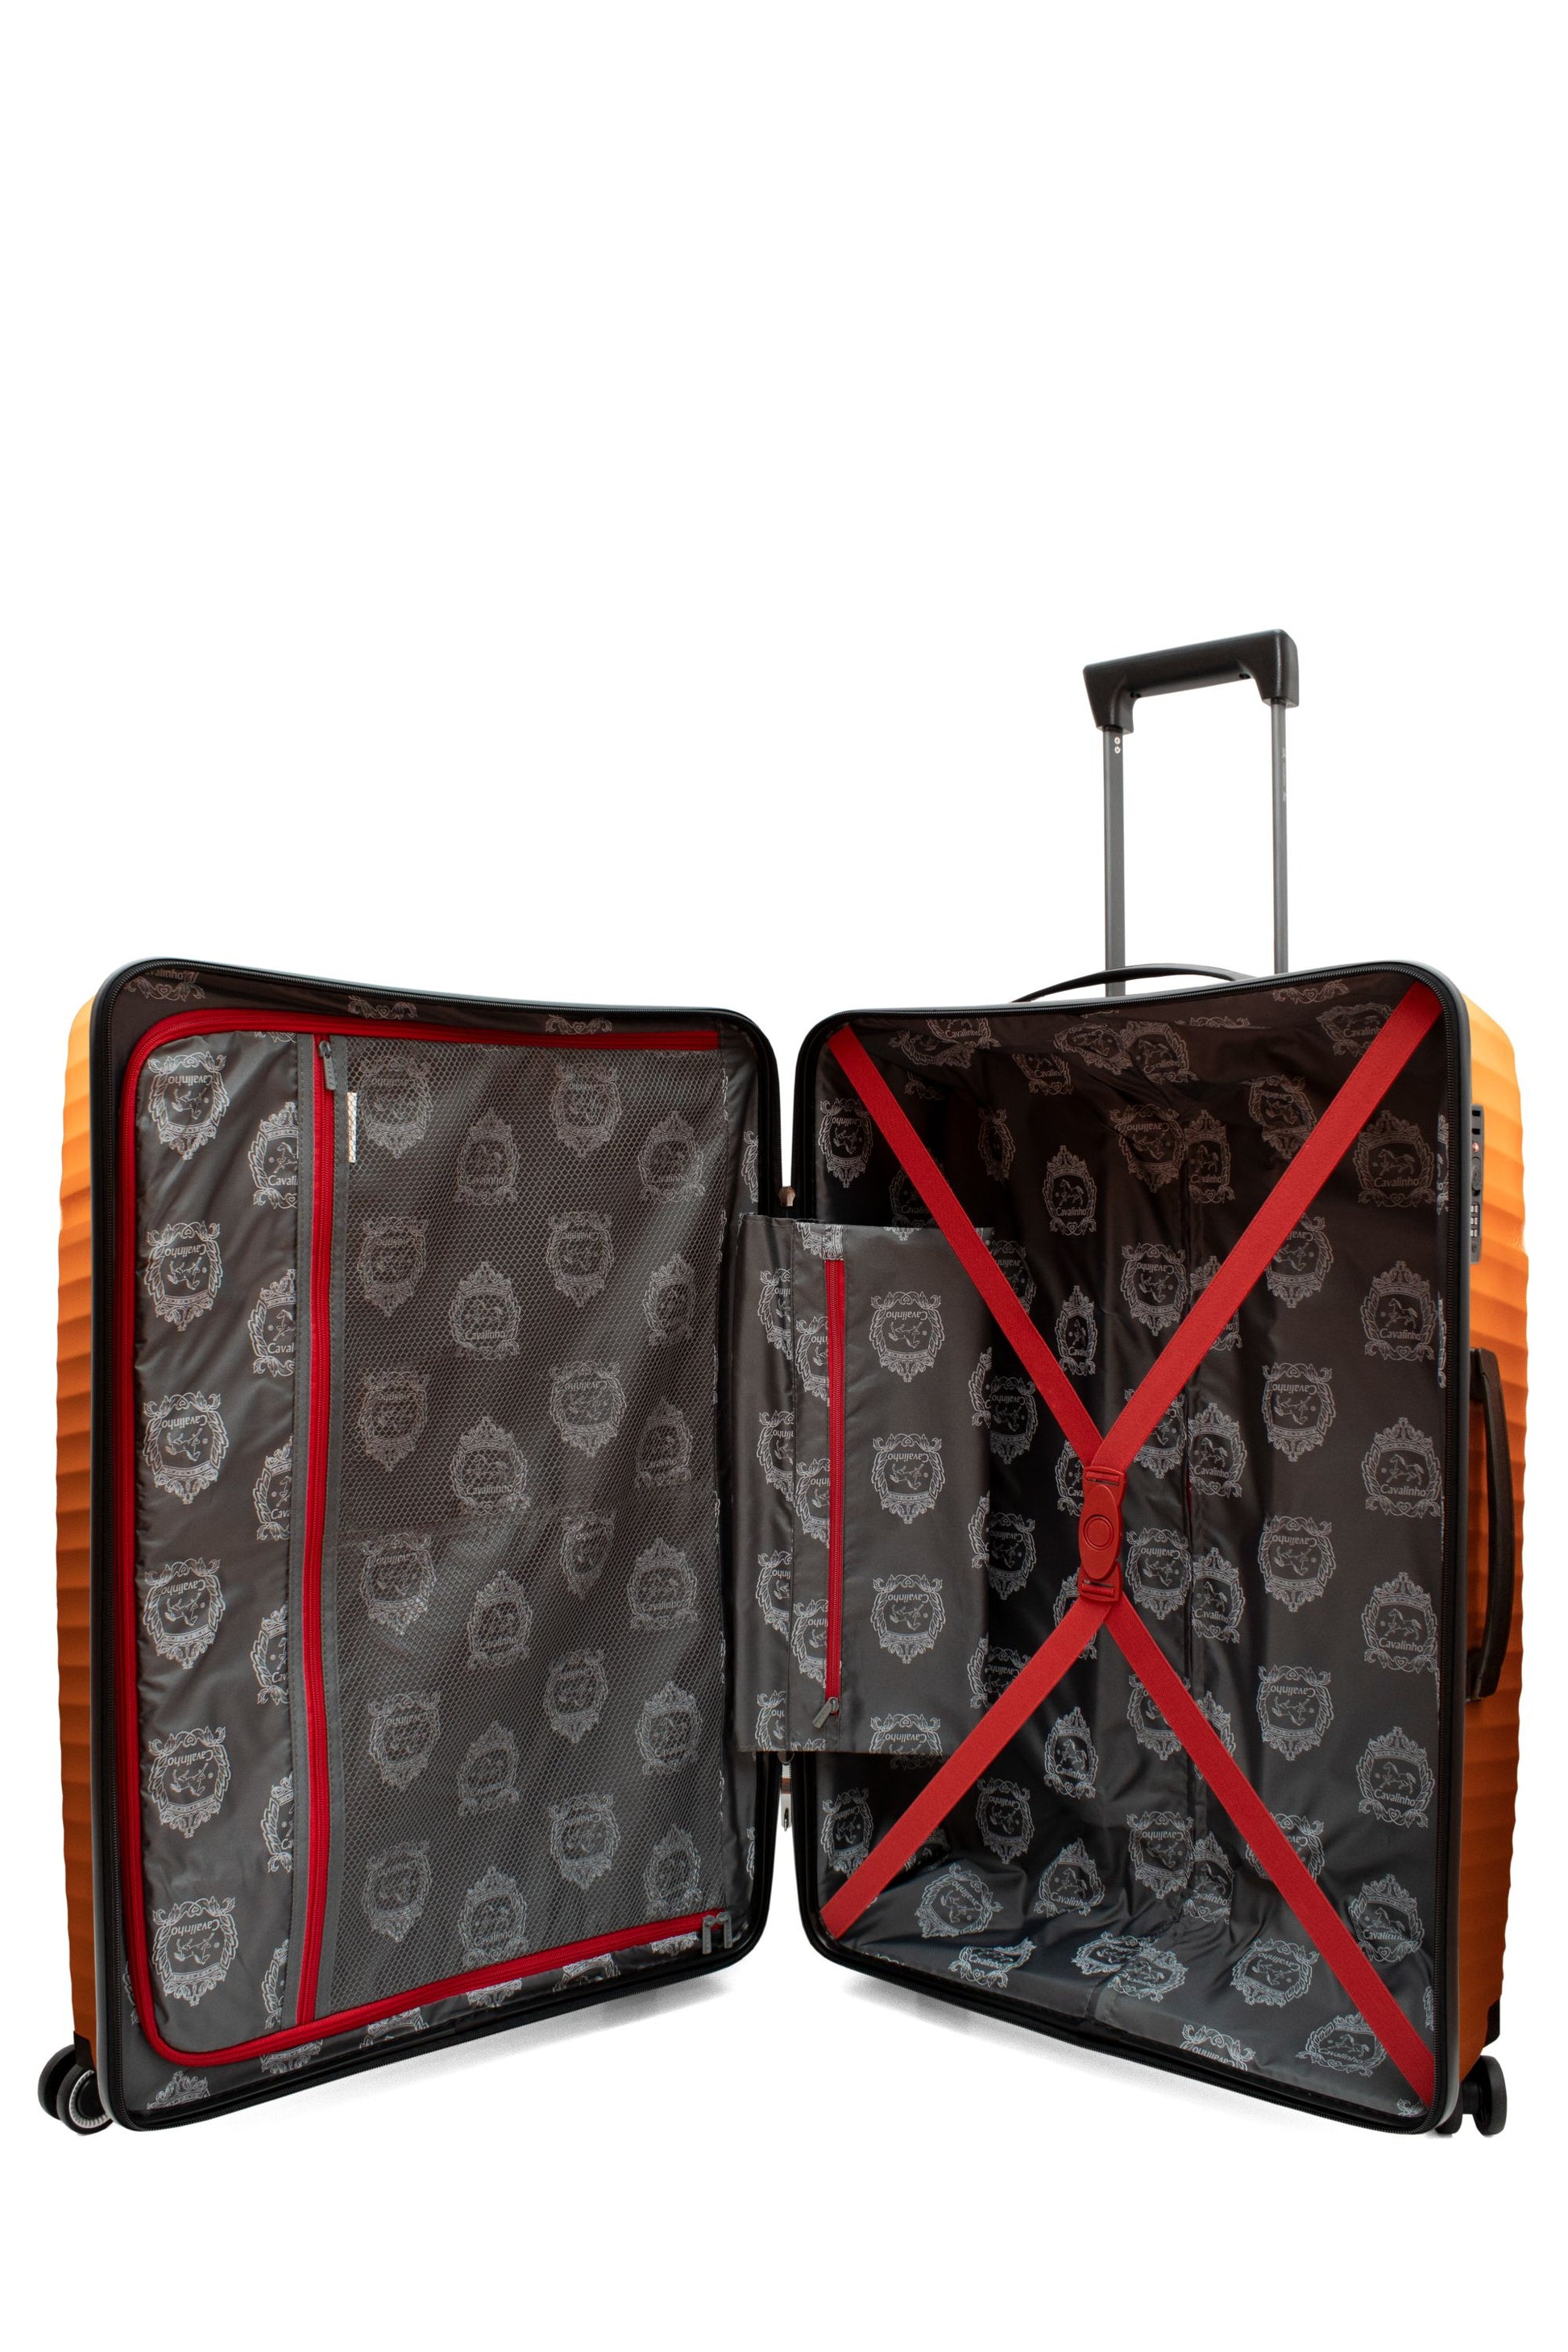 Cavalinho Check-in Hardside Luggage (24" or 28") - 28 inch DarkOrange - 68010003.37.28_4